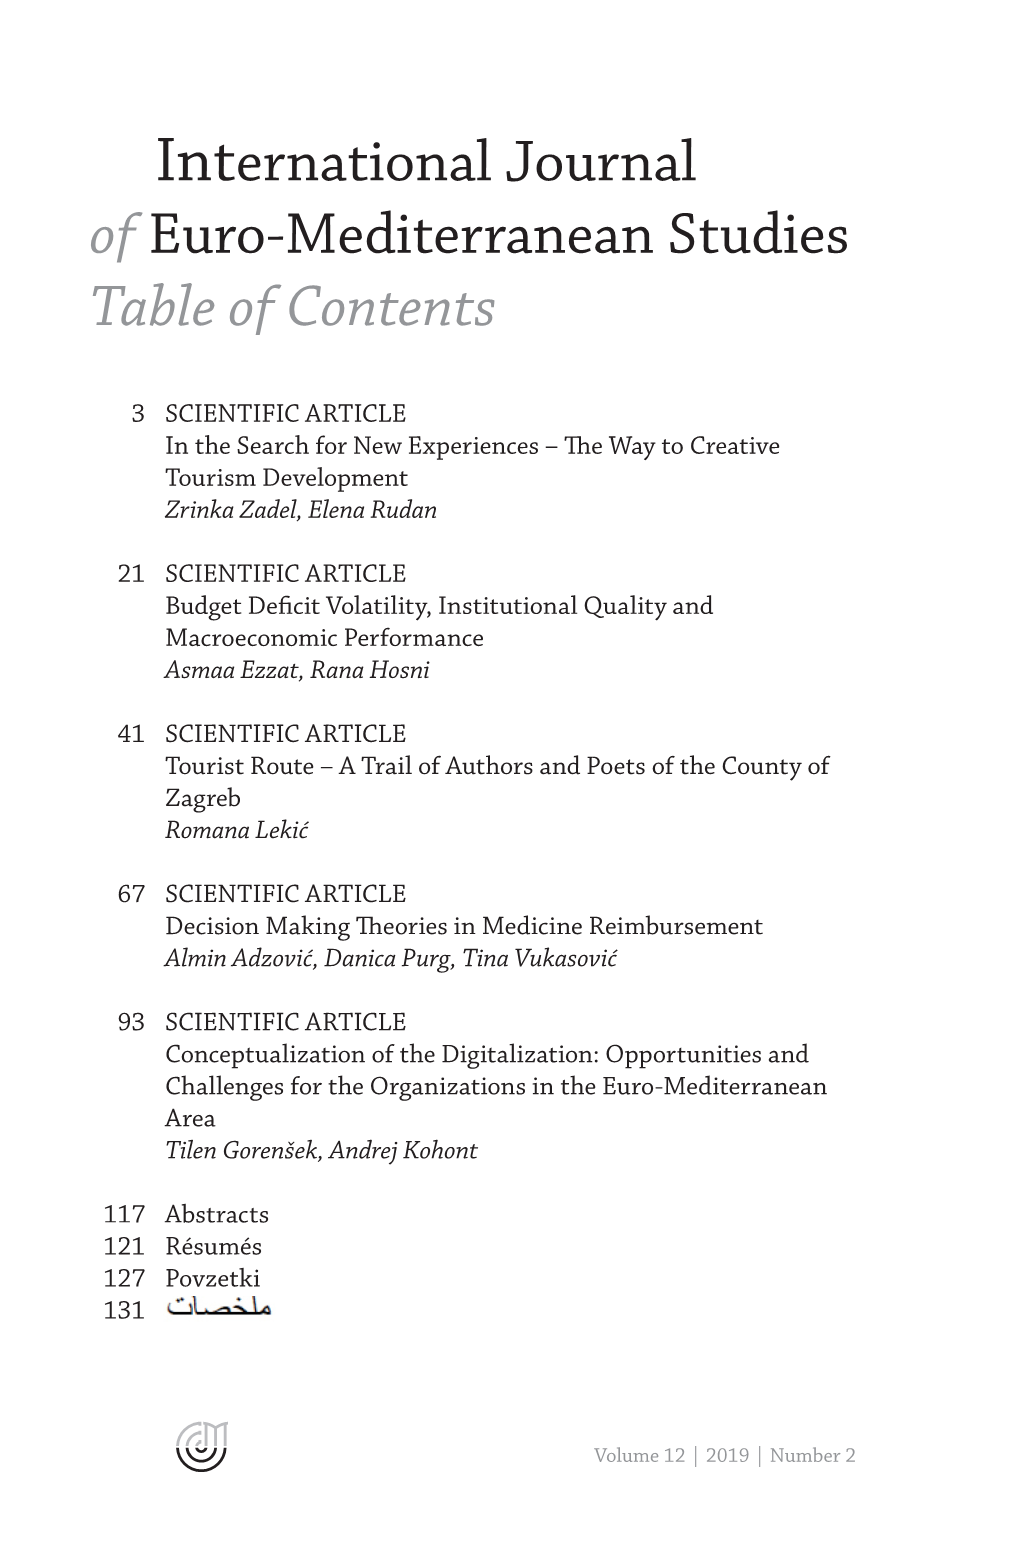 International Journal of Euro-Mediterranean Studies Table of Contents